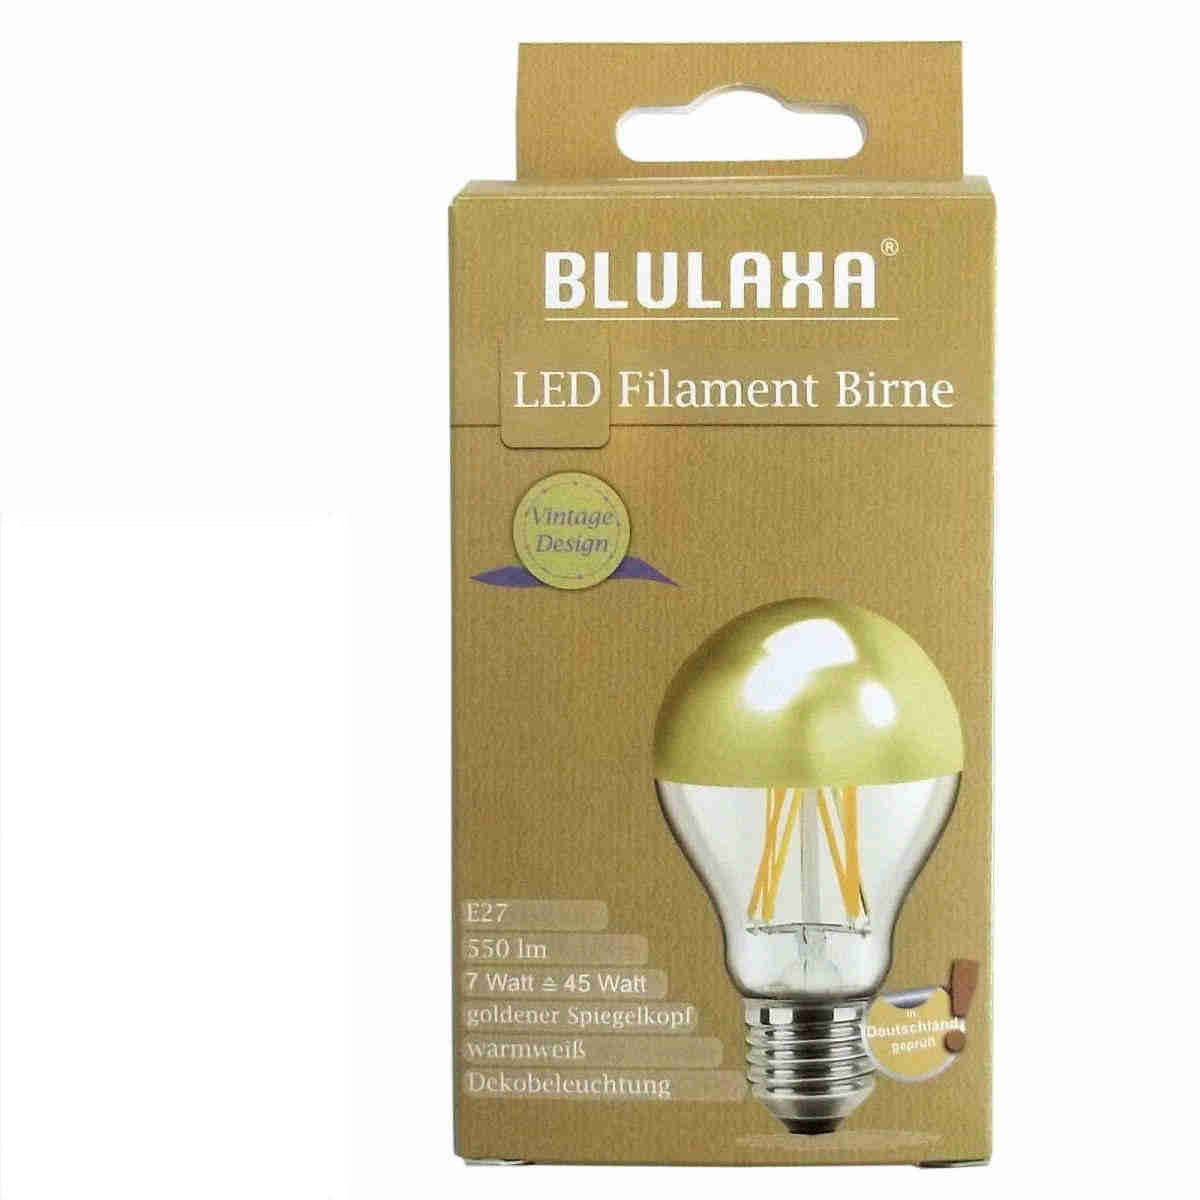 Blulaxa - LED Filament Vintage Birne Spiegelkopf gold 7 Watt E27 827 Warmweiss extra 2700 Kelvin